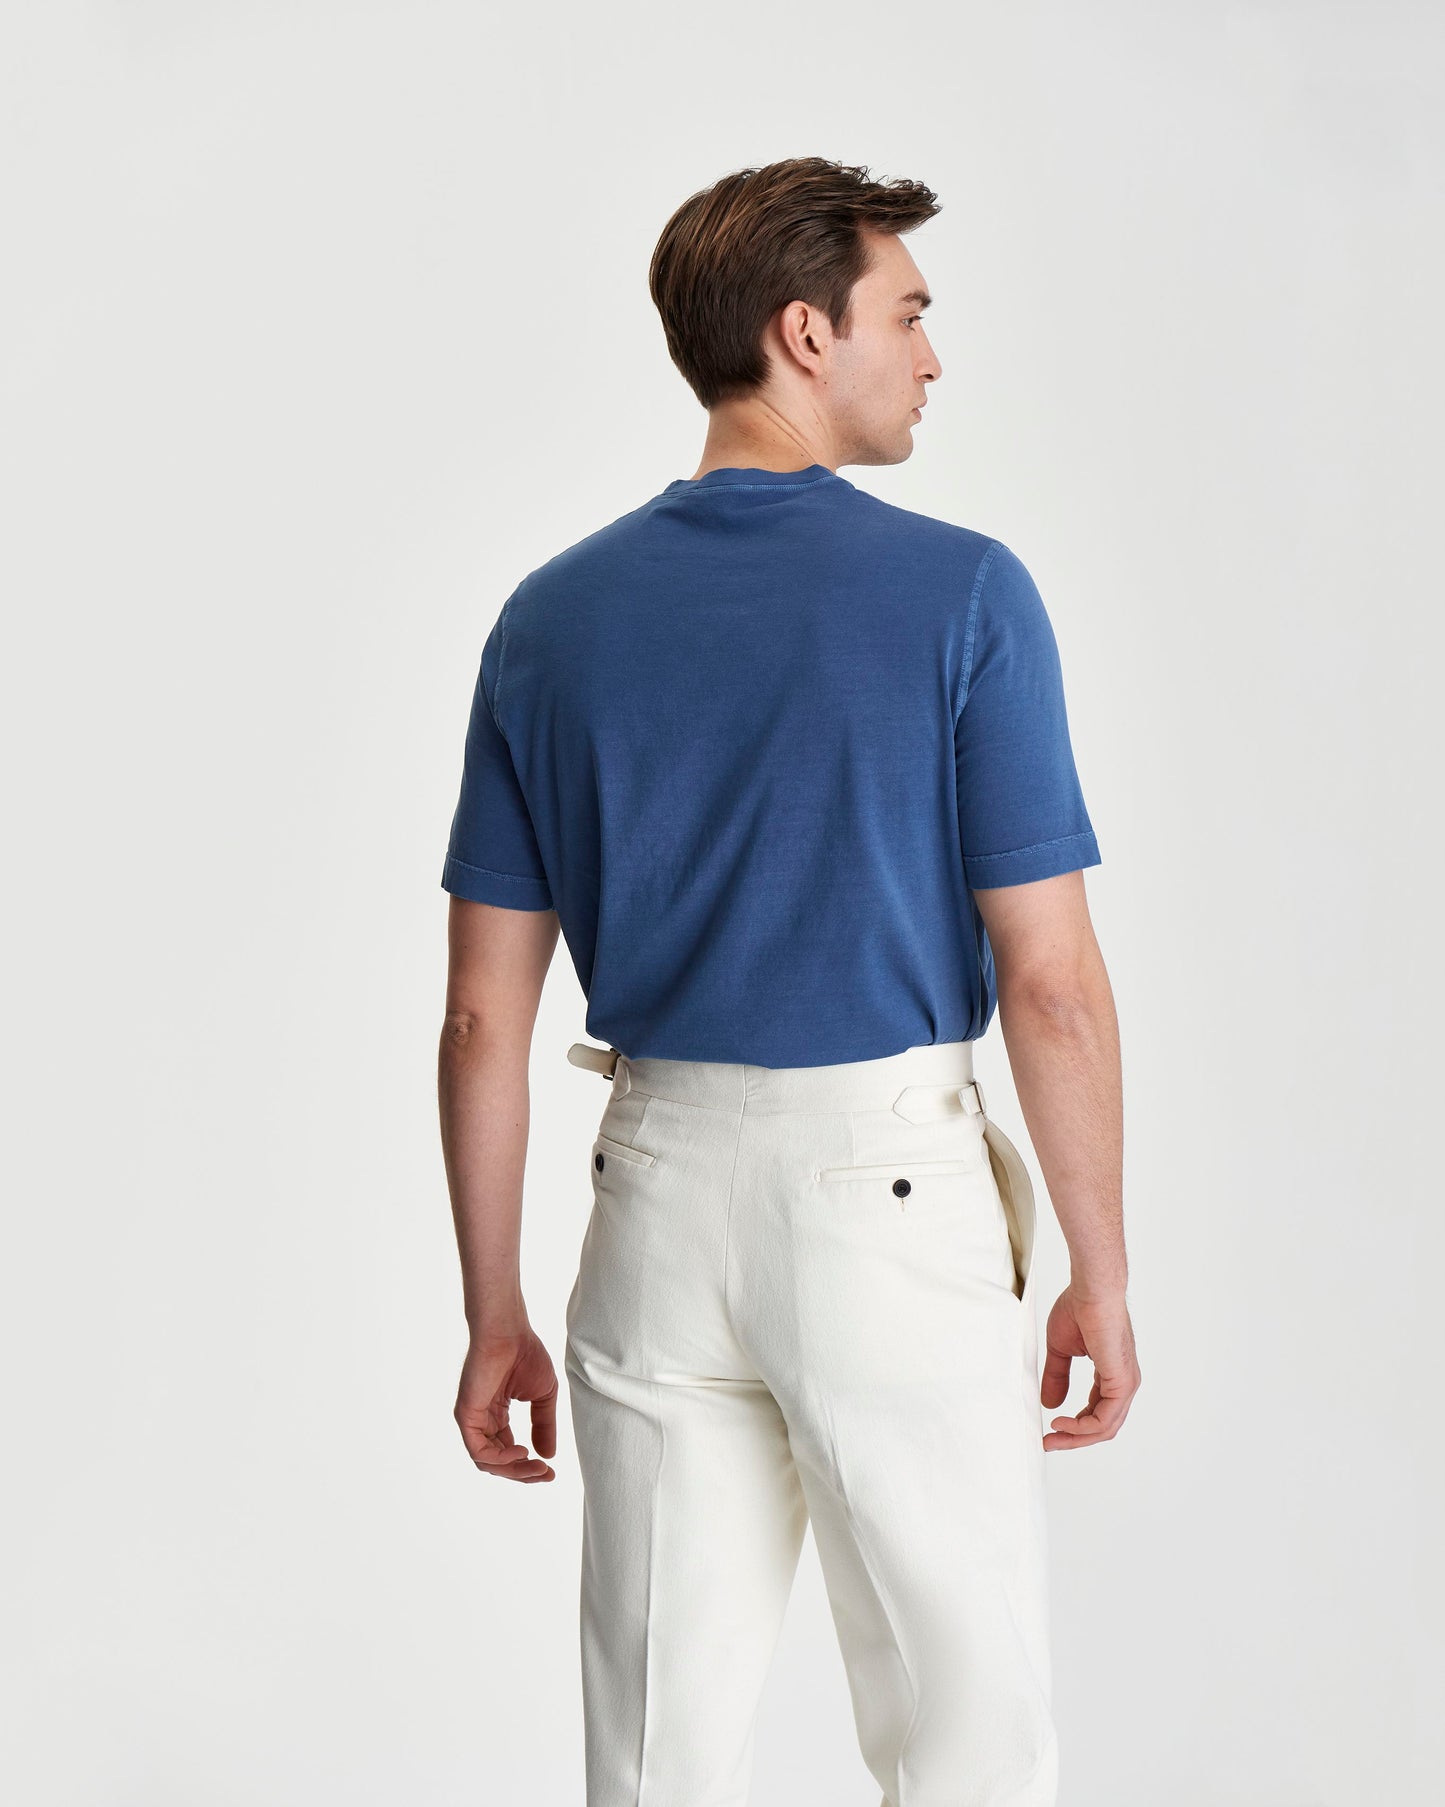 Cotton Pocket T-Shirt Denim Colour Model Back